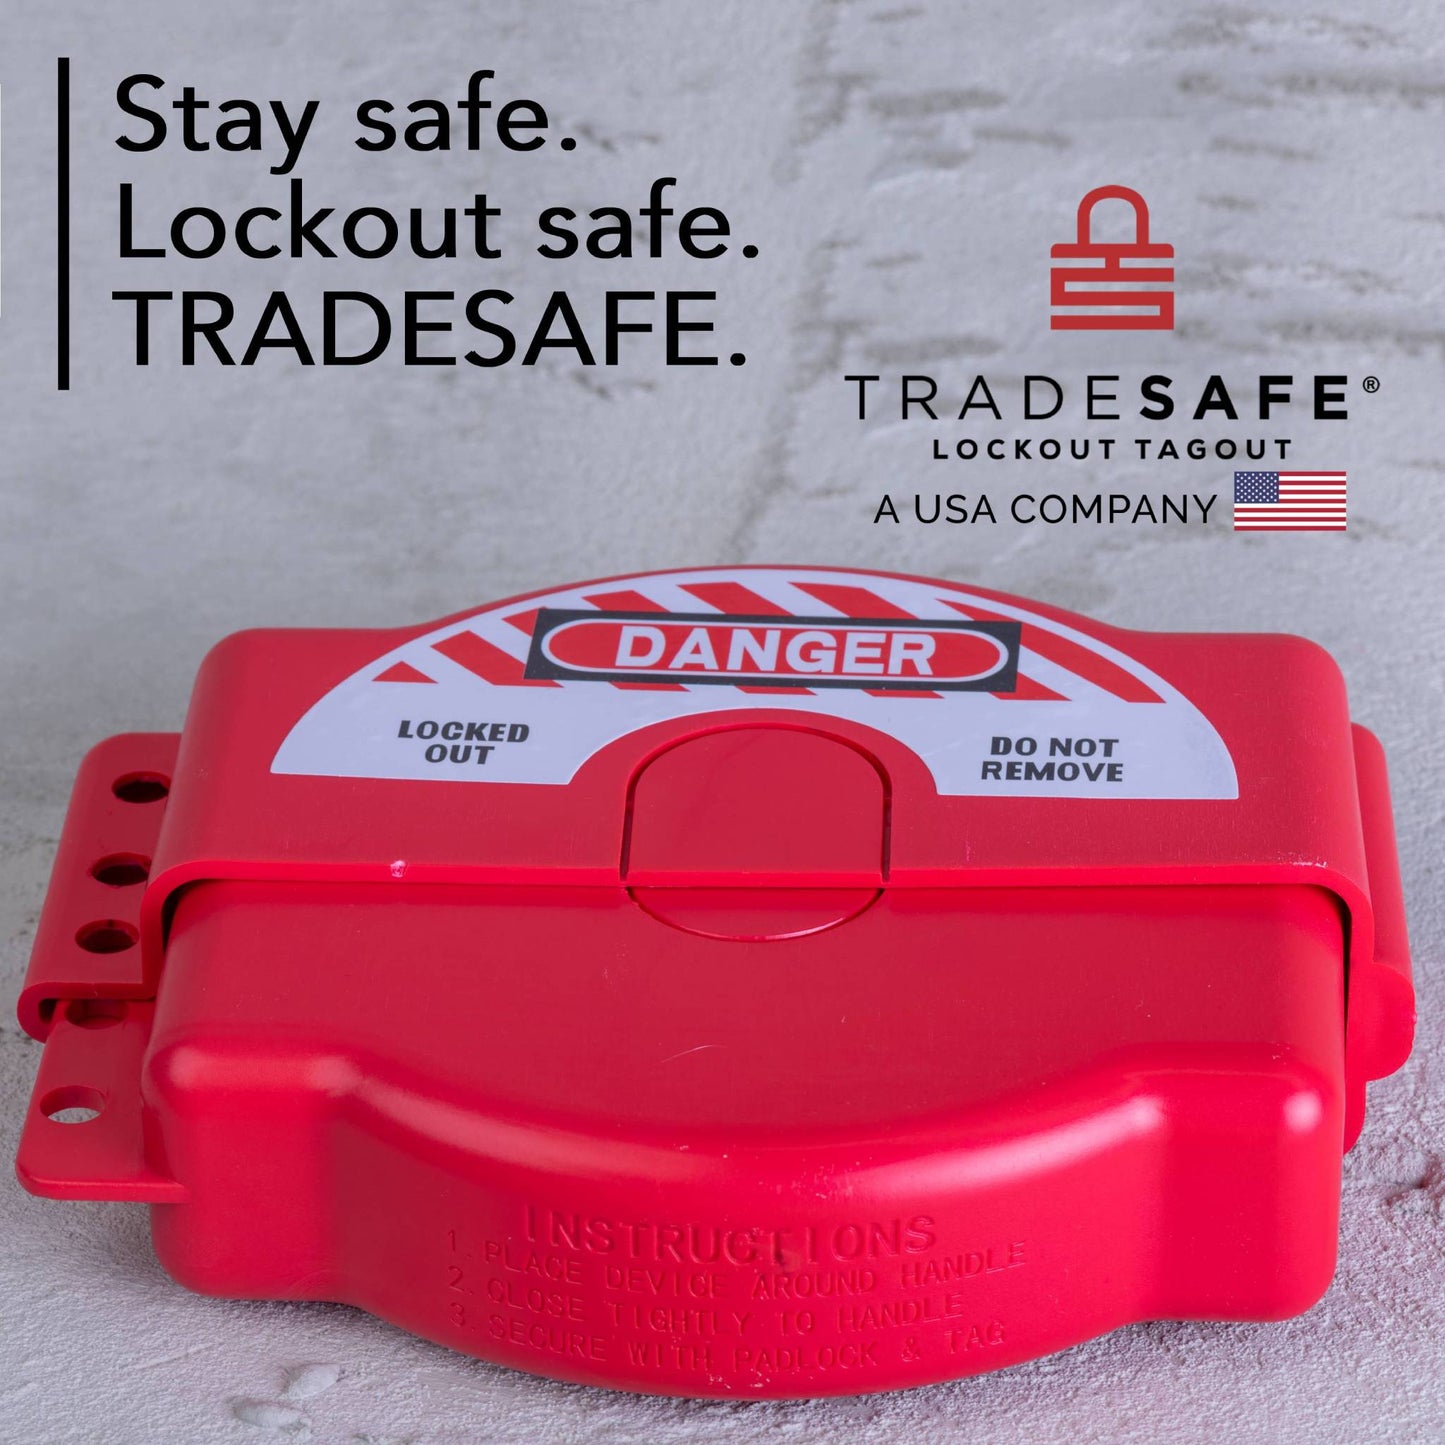 tradesafe lockout tagout adjustable gate valve brand image